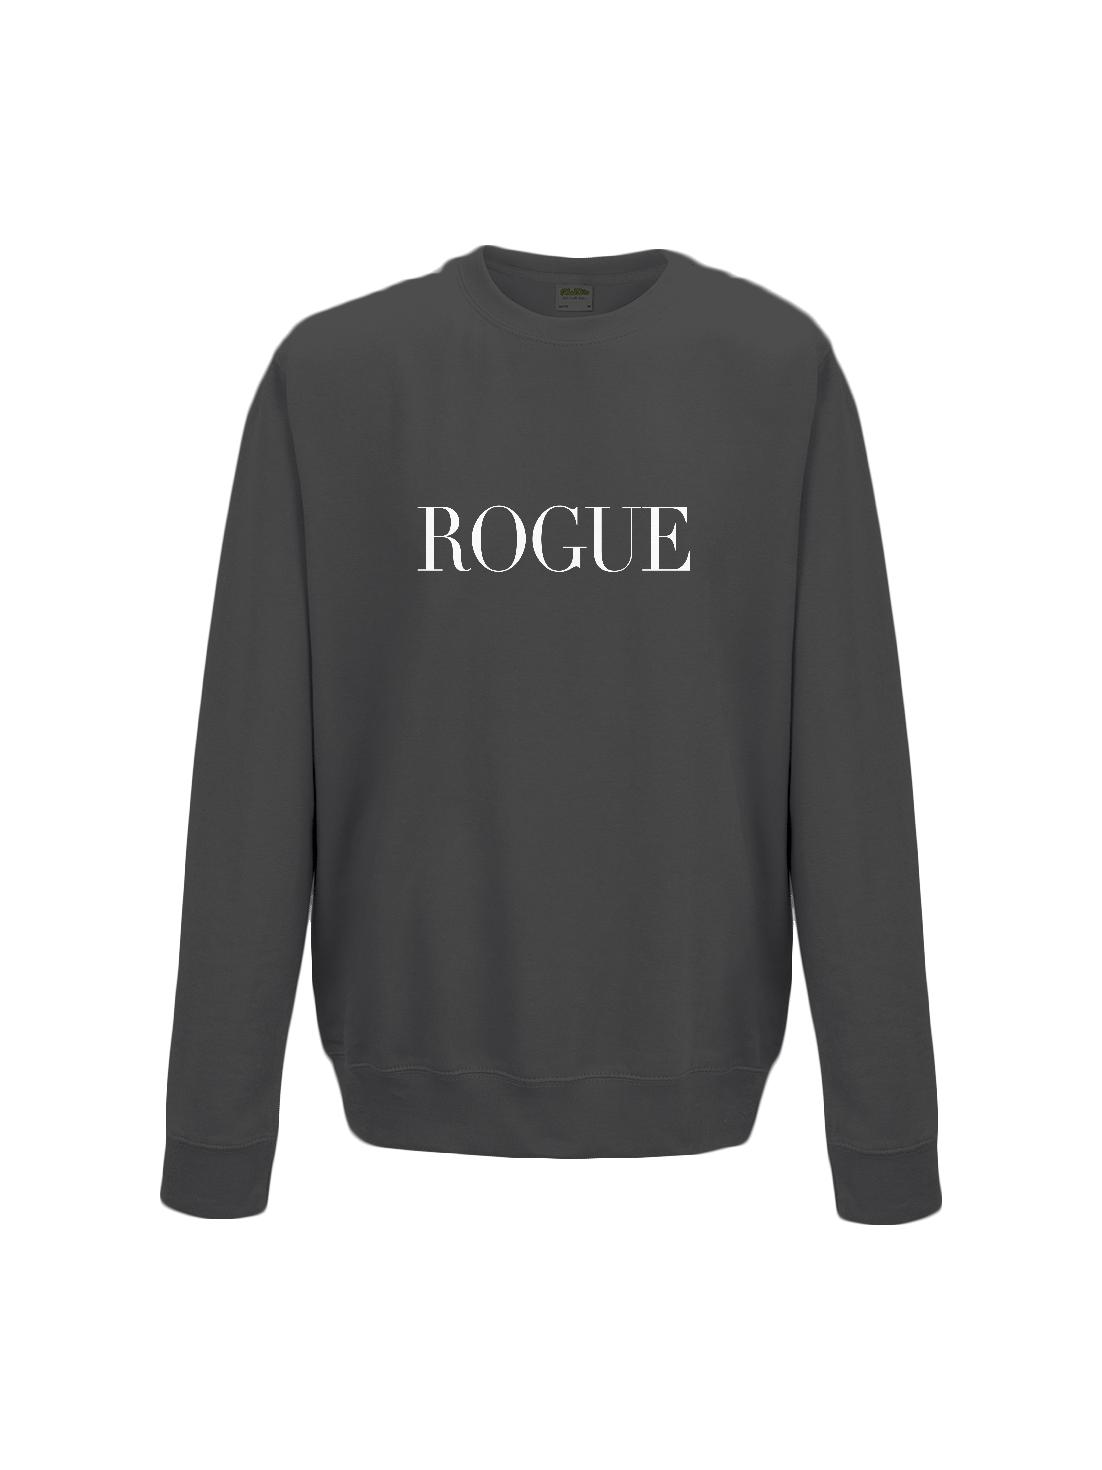 ROGUE sweatshirt in black